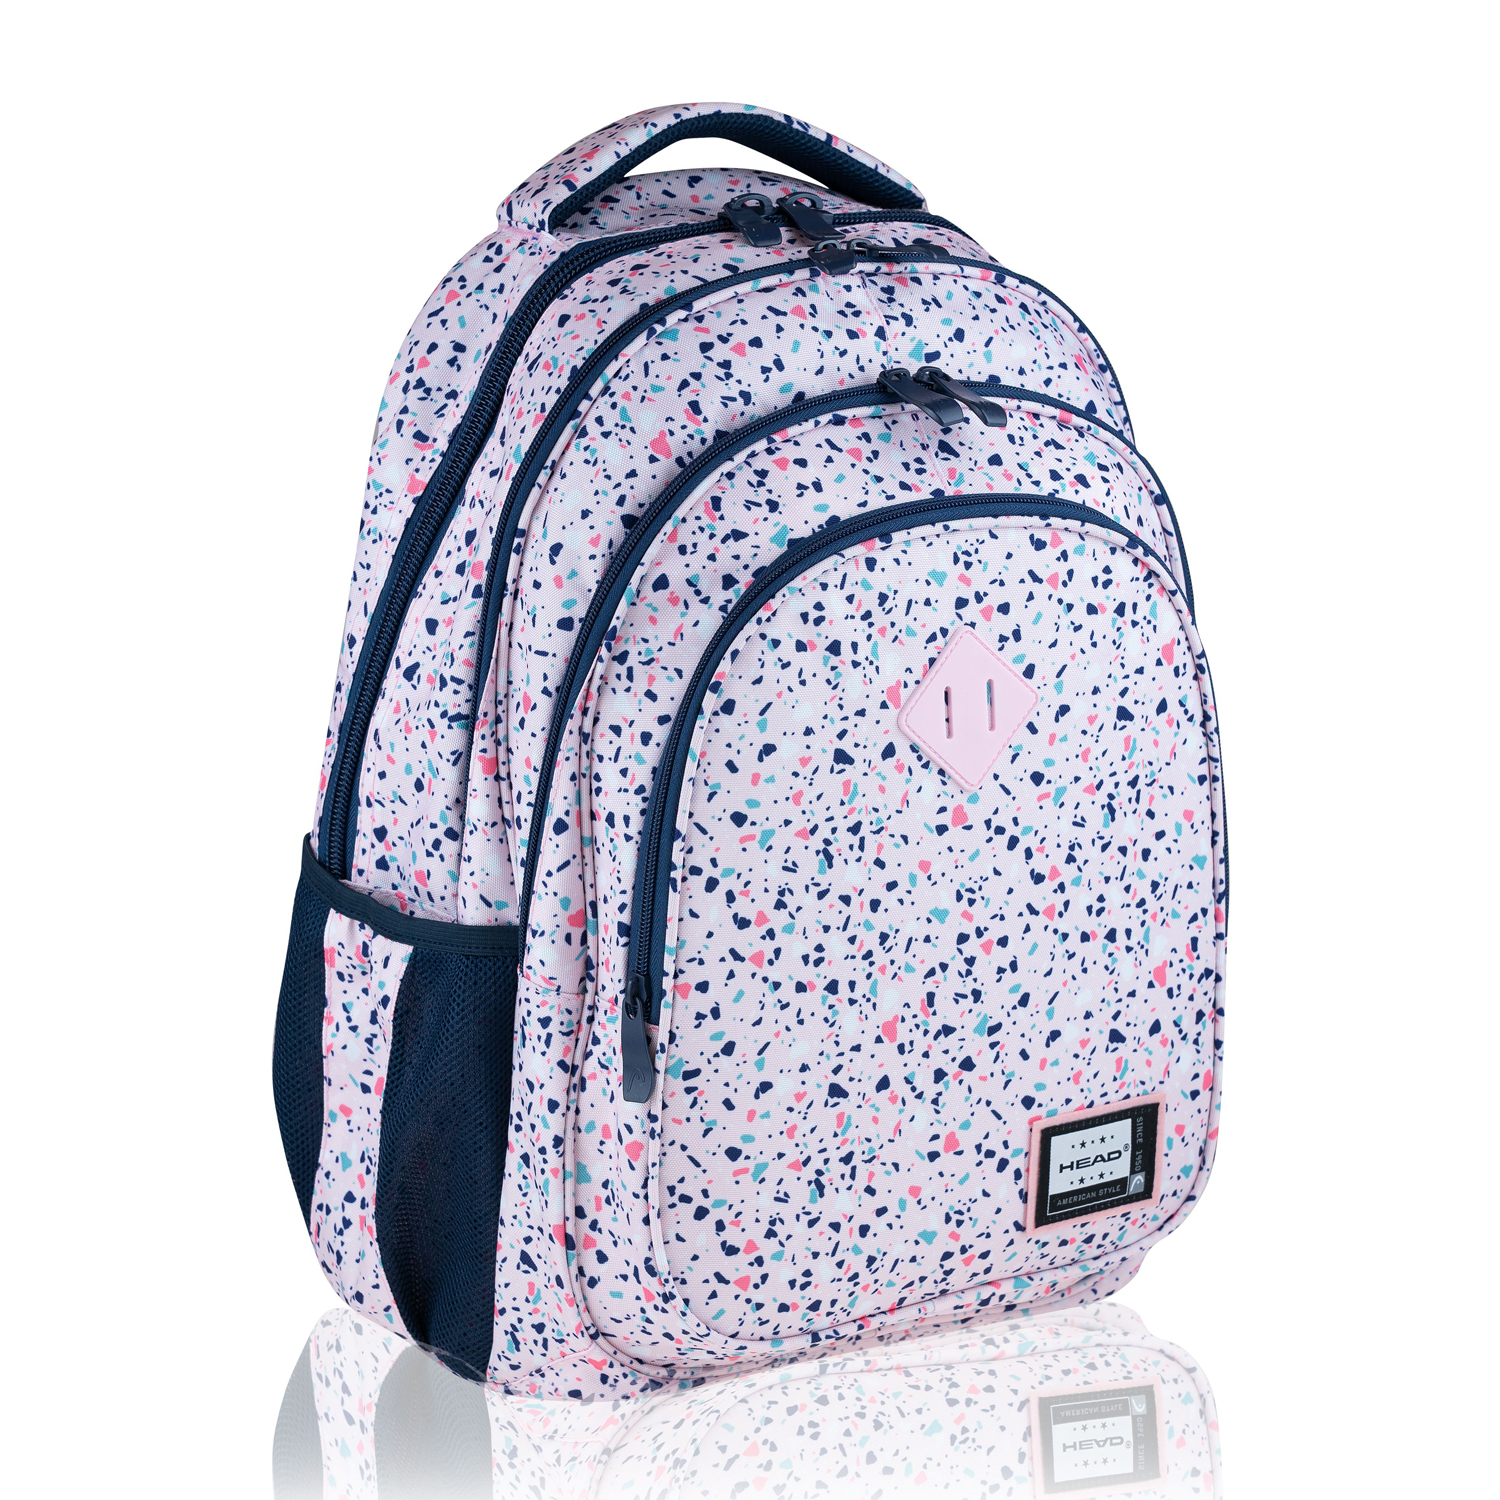 Рюкзак HEAD Pink Terrazzo цвет белый/розовый/синий - фото 1